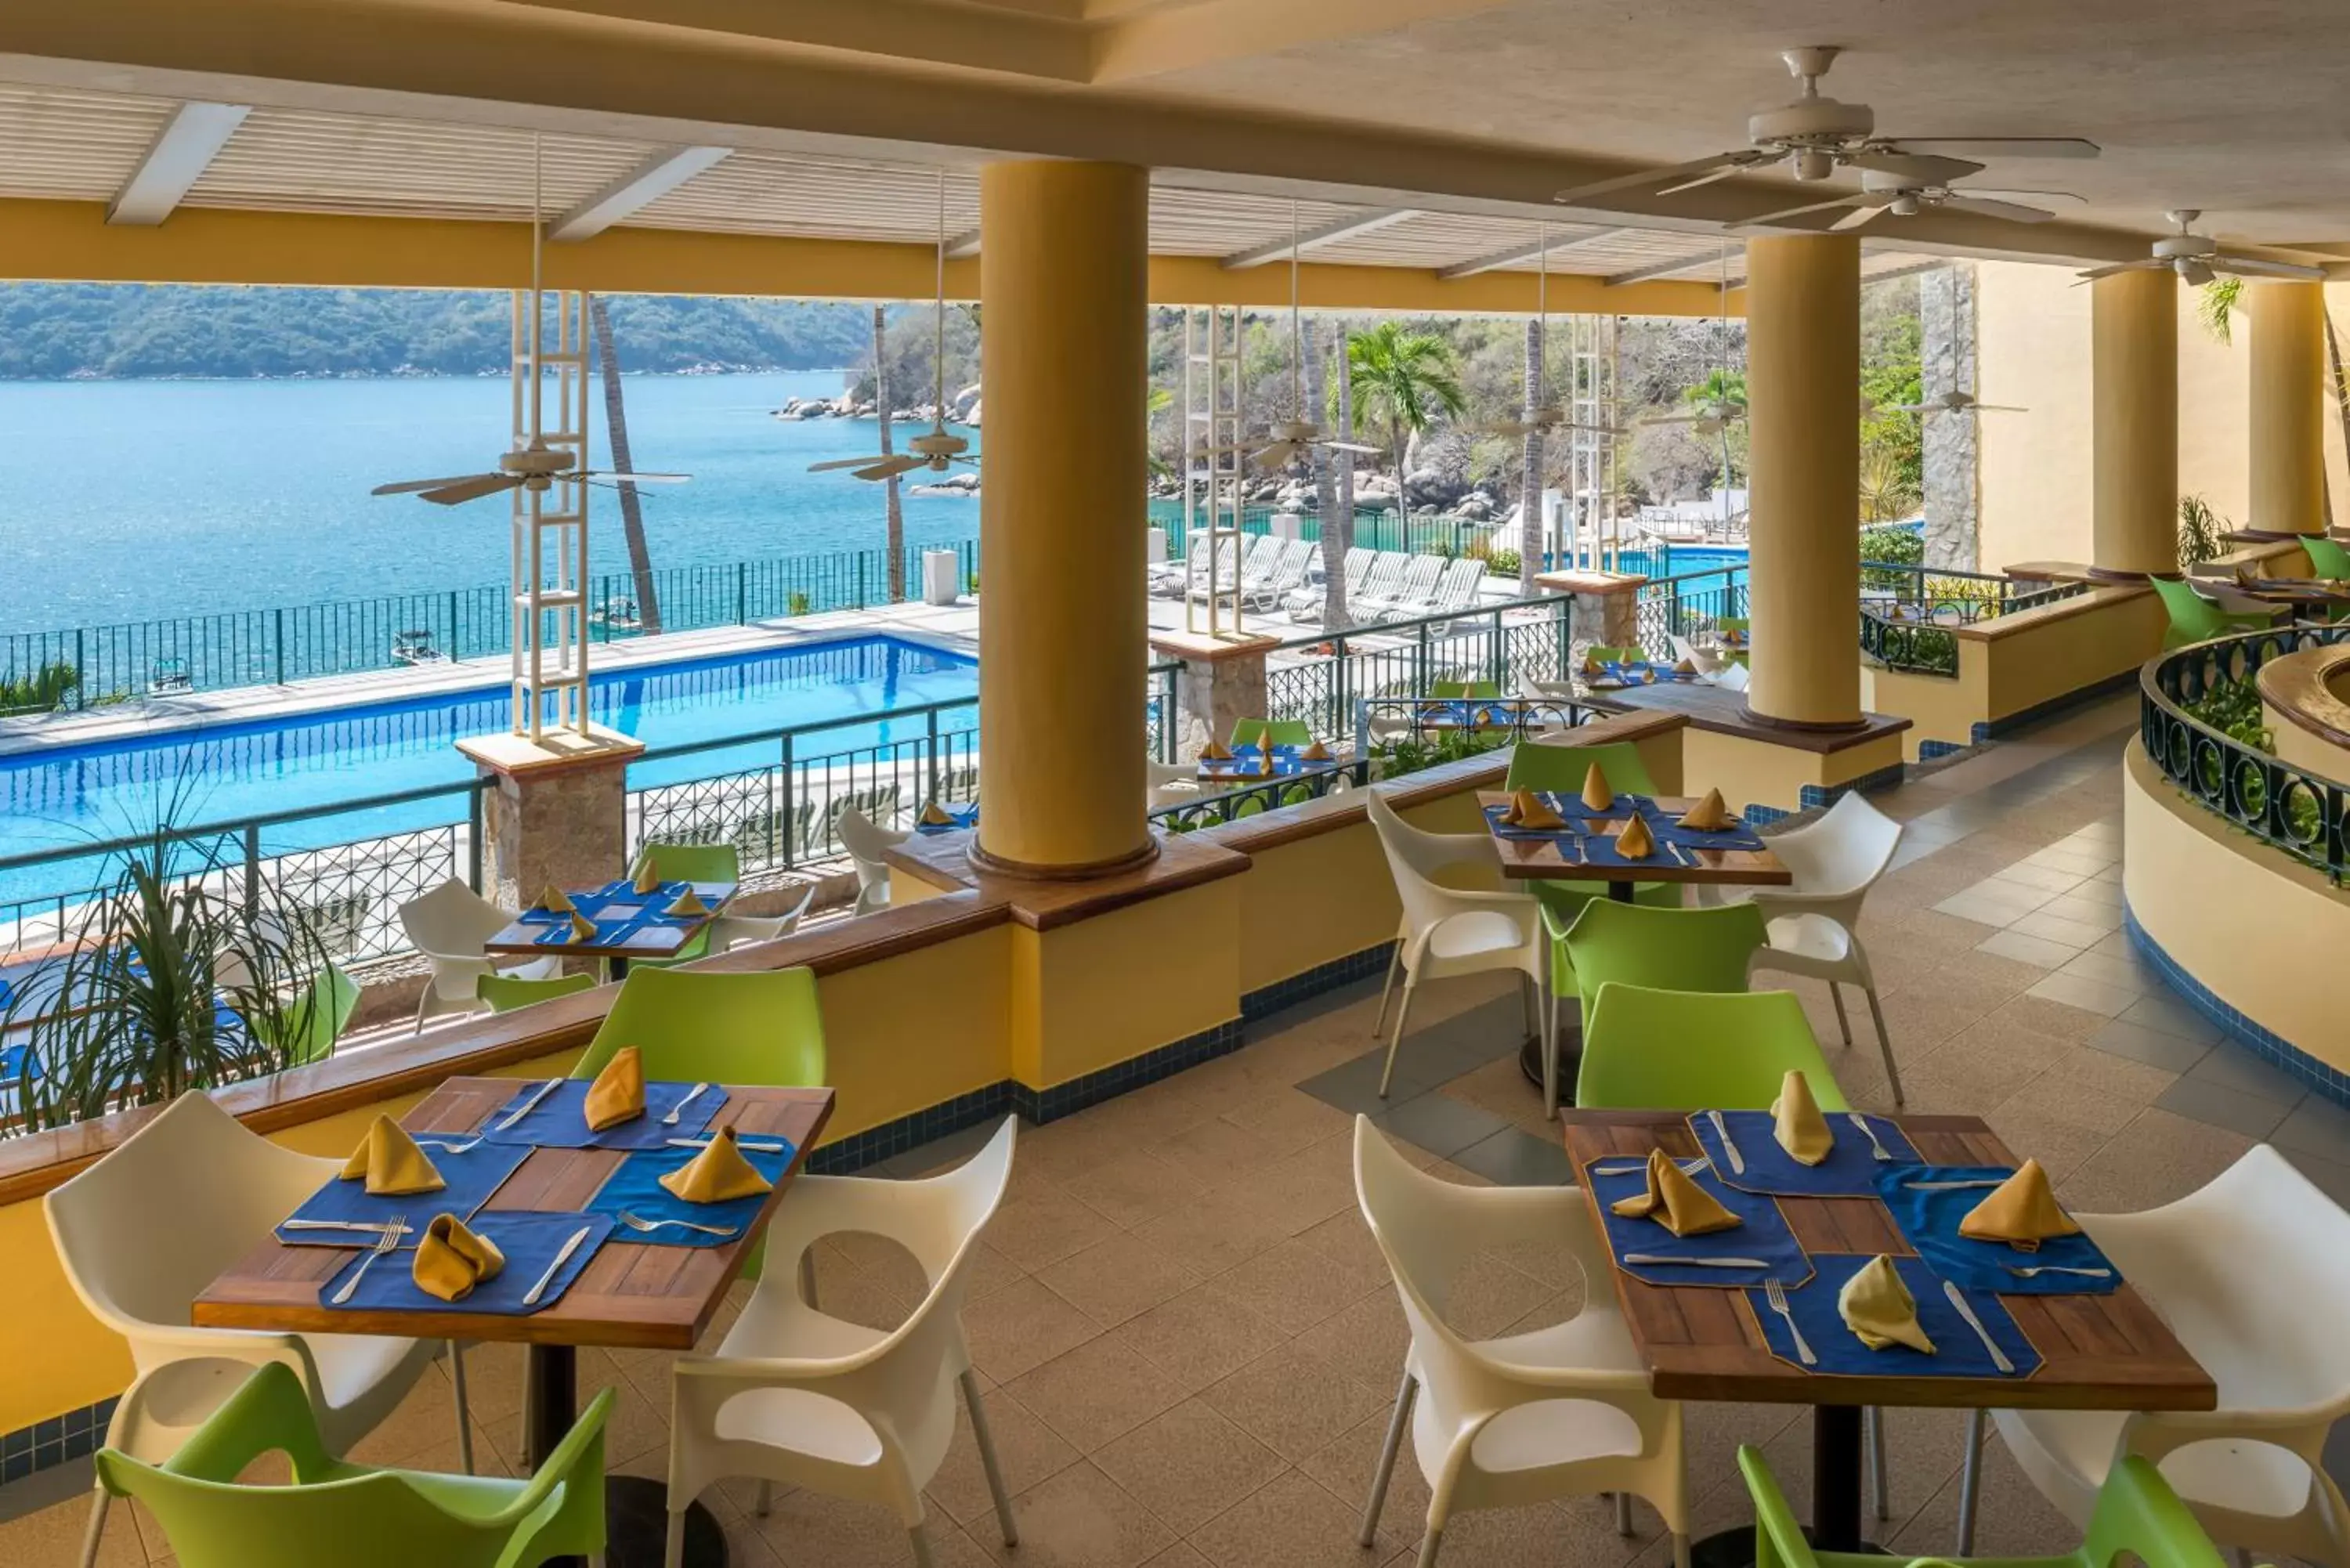 Restaurant/Places to Eat in Camino Real Acapulco Diamante